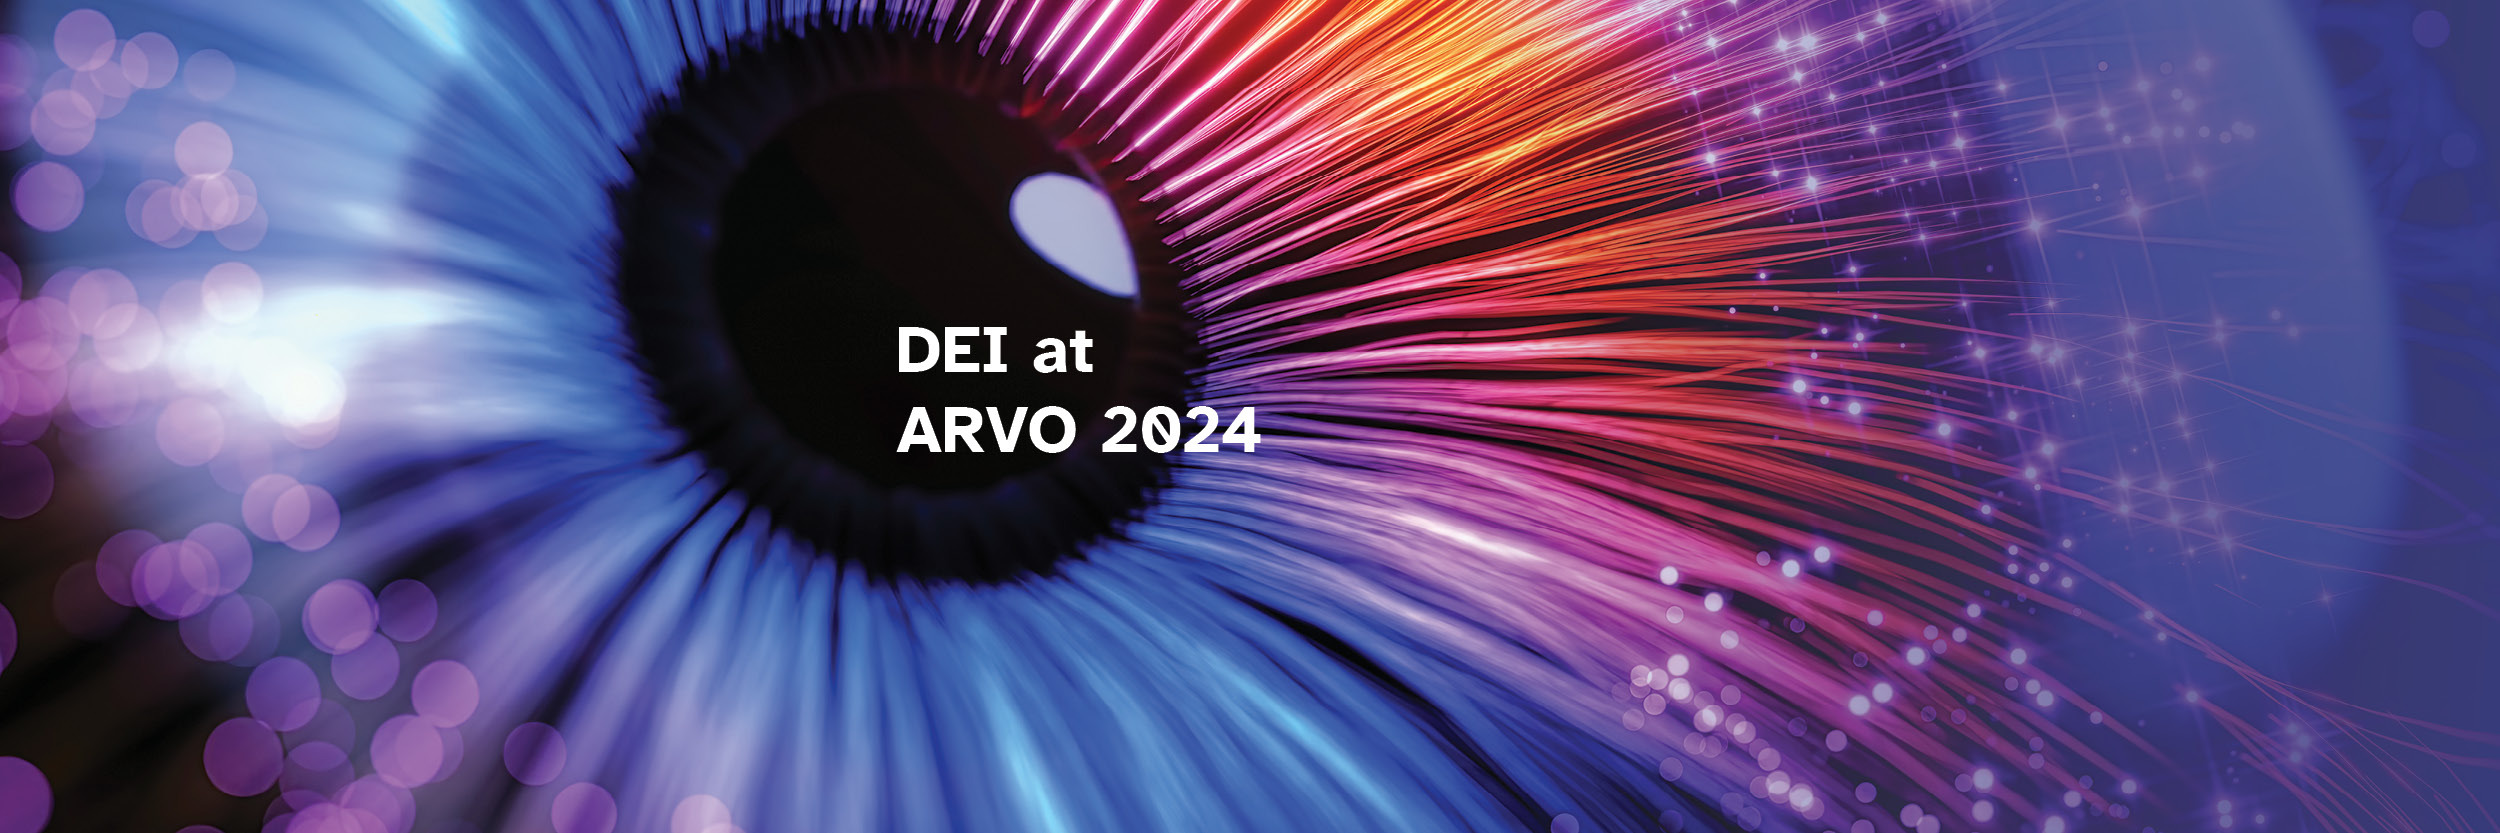 DEI Announces Upcoming Presentations at ARVO